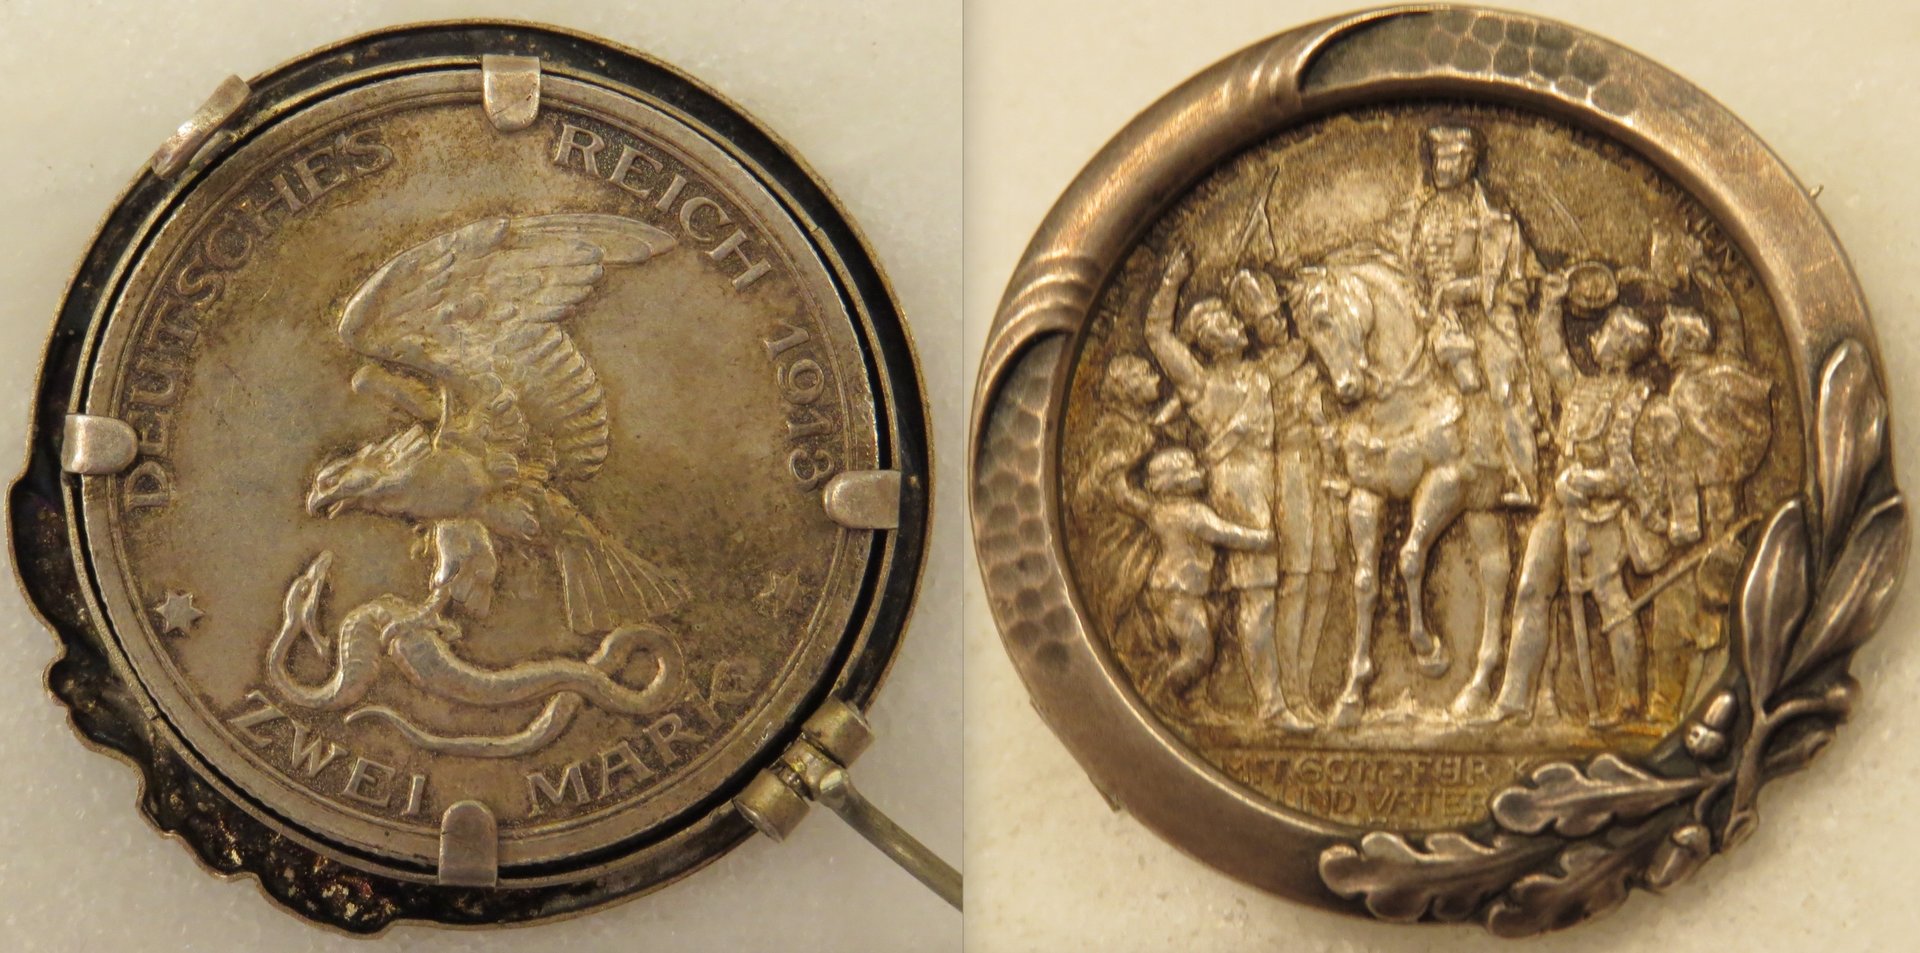 1913 Prussia 2 mark pin copy.jpeg